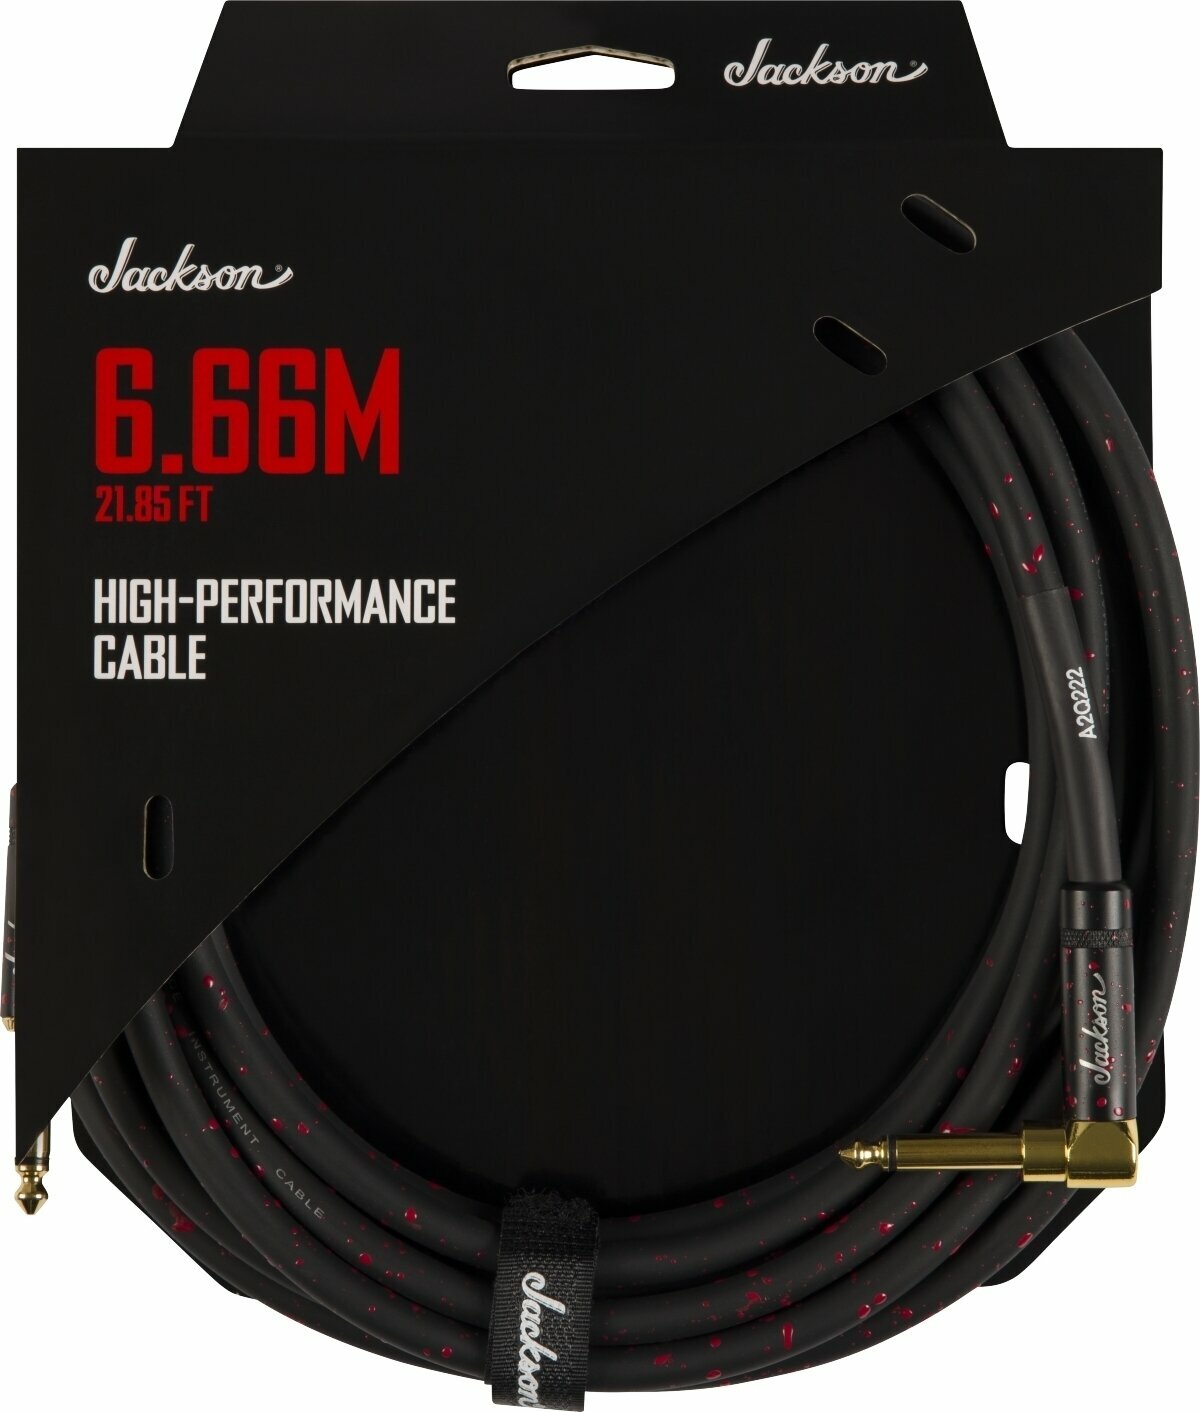 Kabel za instrumente Jackson High Performance Cable Crna-Crvena 6,66 m Ravni - Kutni